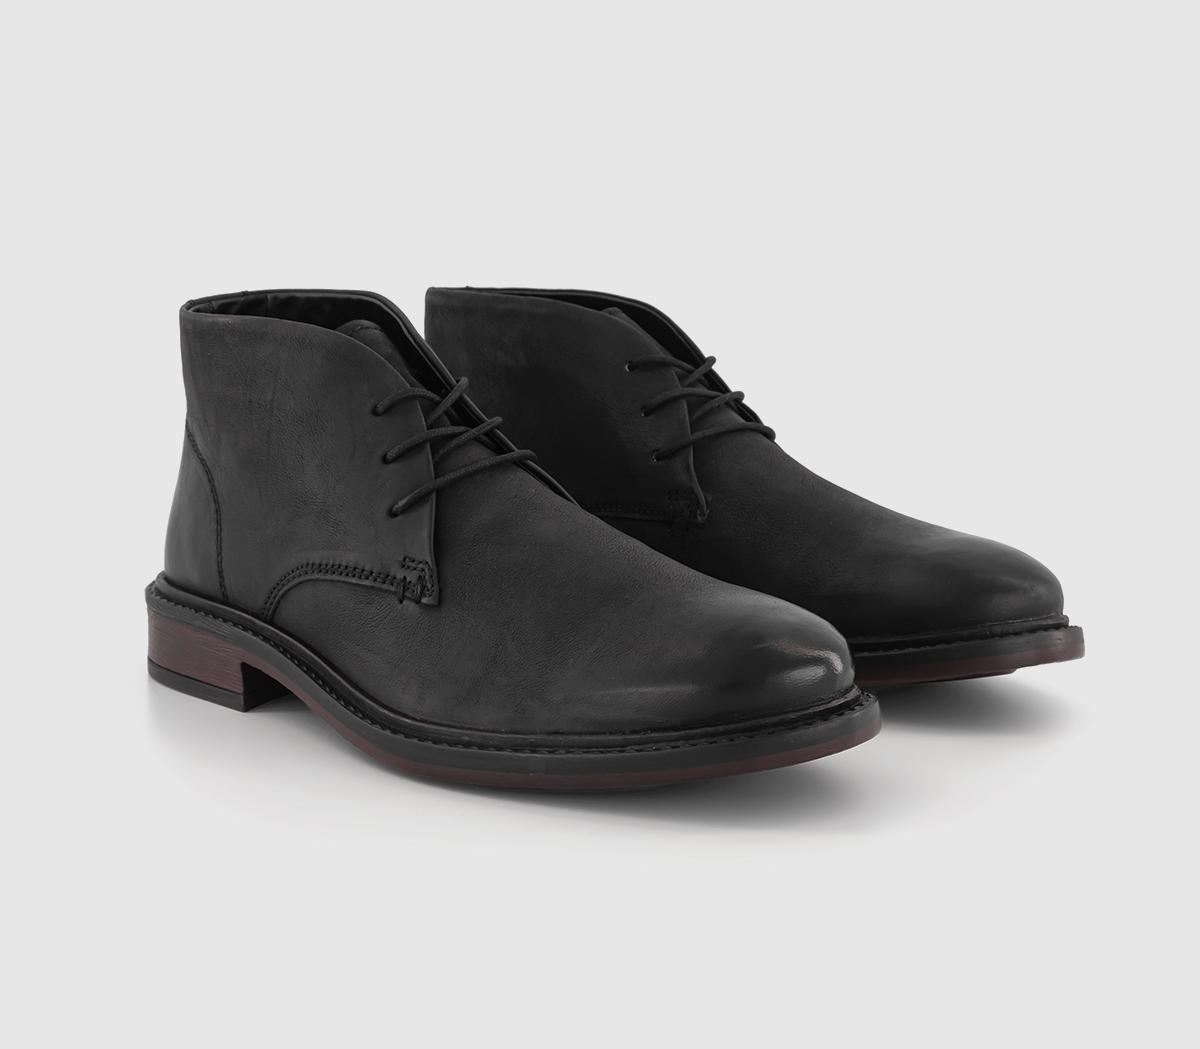 OFFICE Mens Burlington Chukka Boots Black Leather, 7